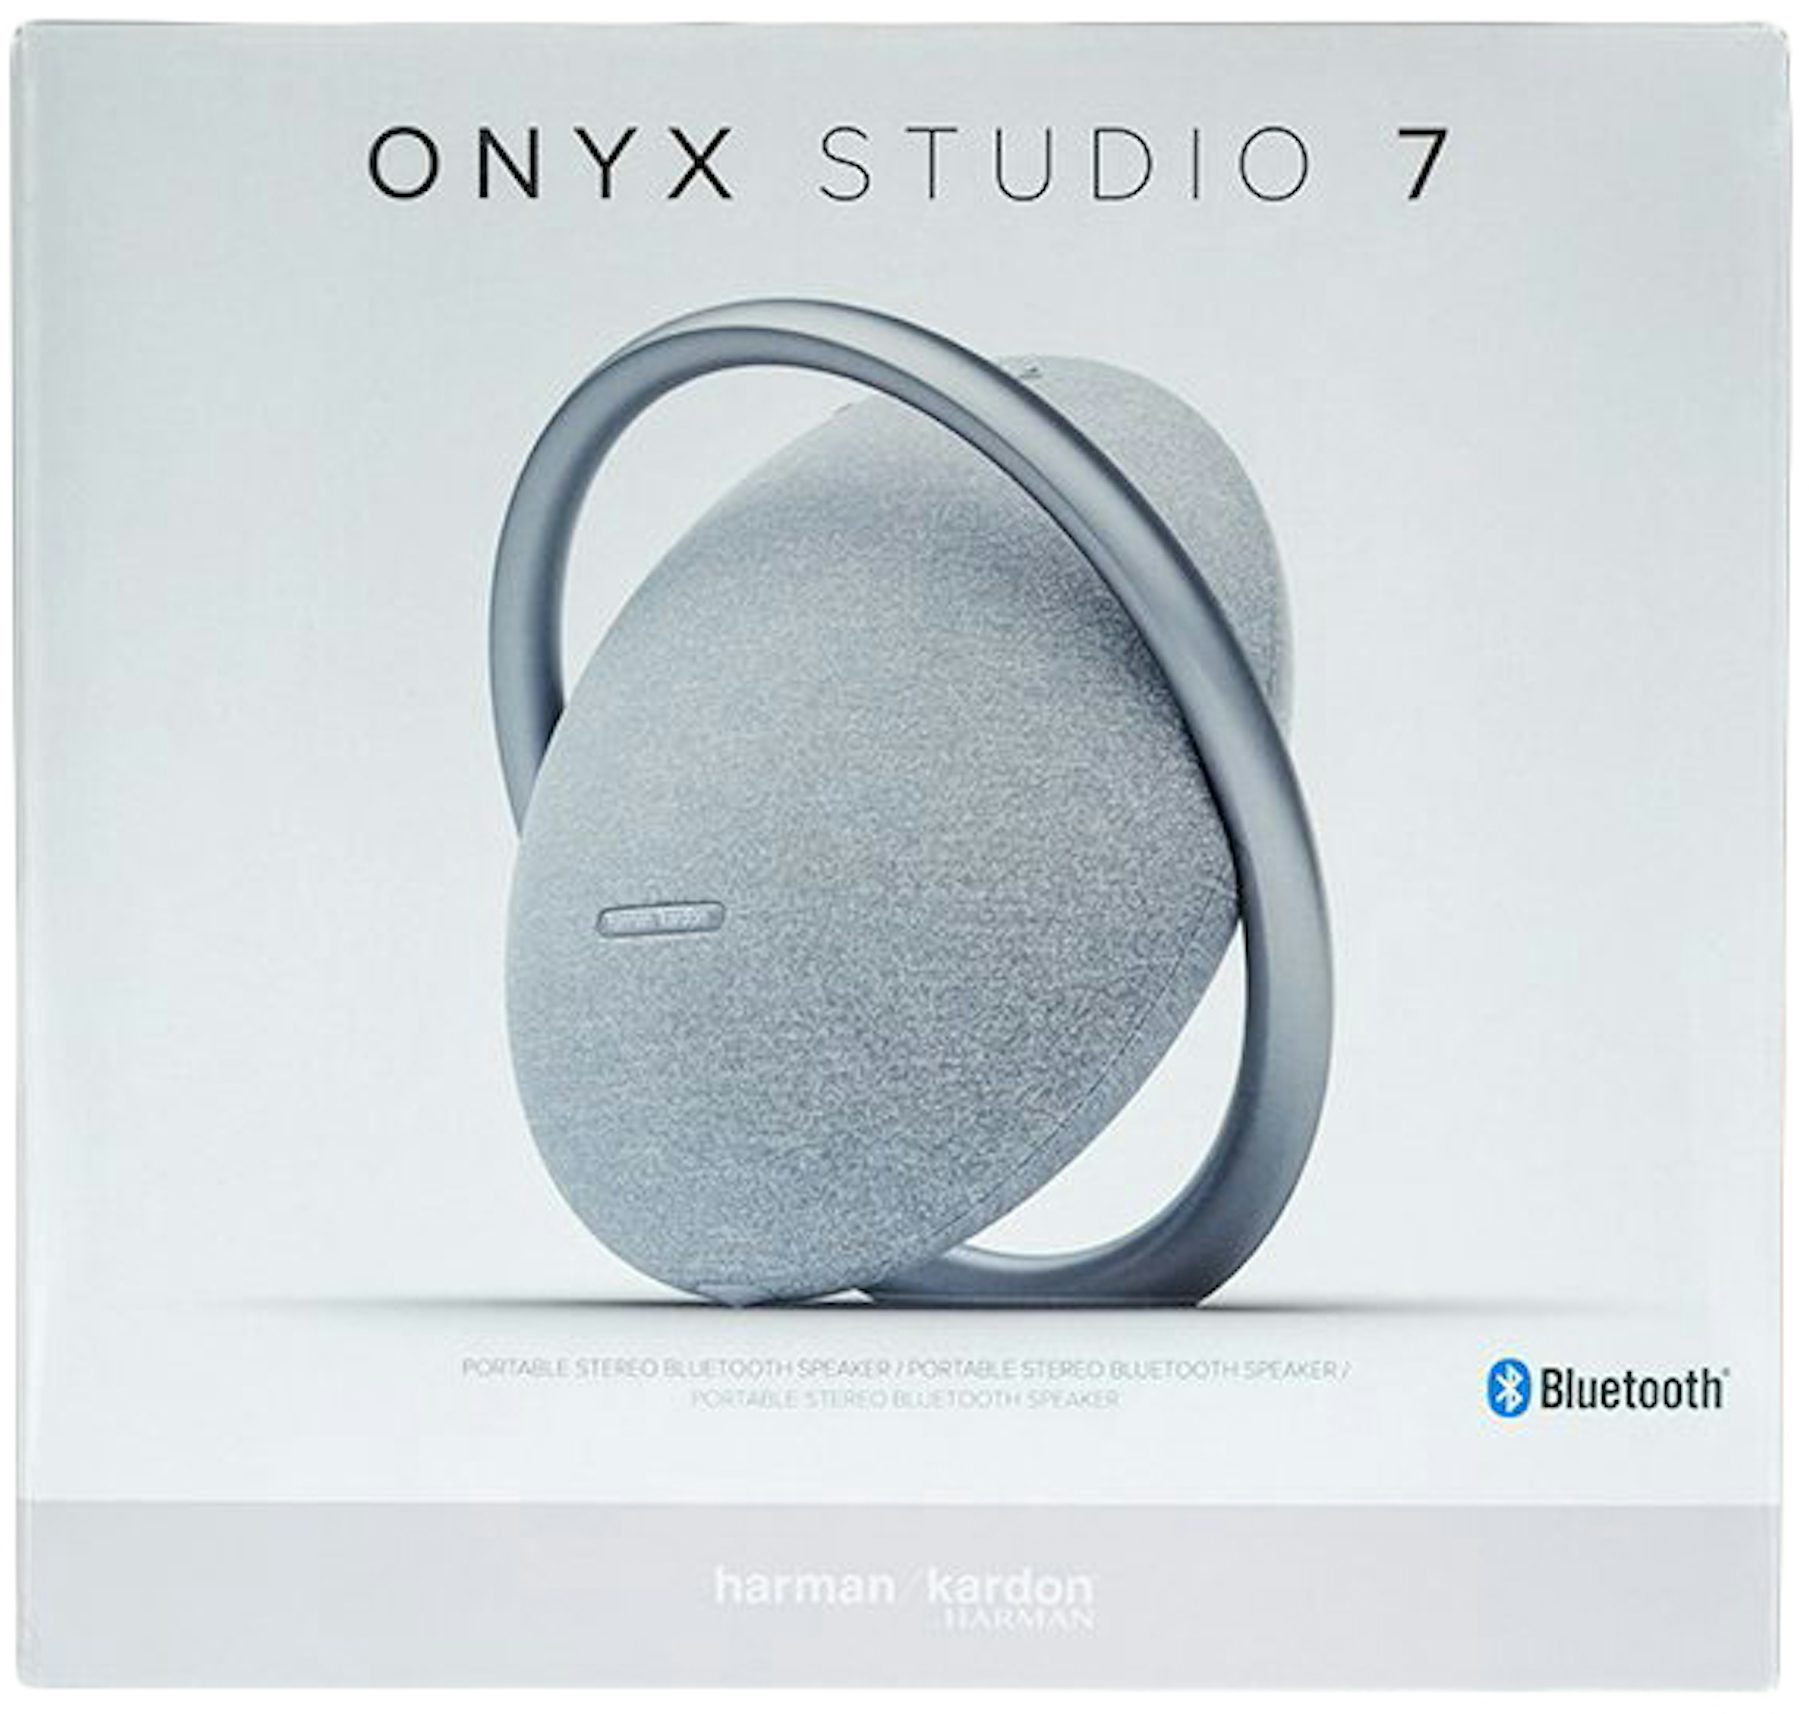 Bluetooth Speaker Grey Stereo Harman 7 Onyx Portable HKOS7GRYAM Kardon US - Studio